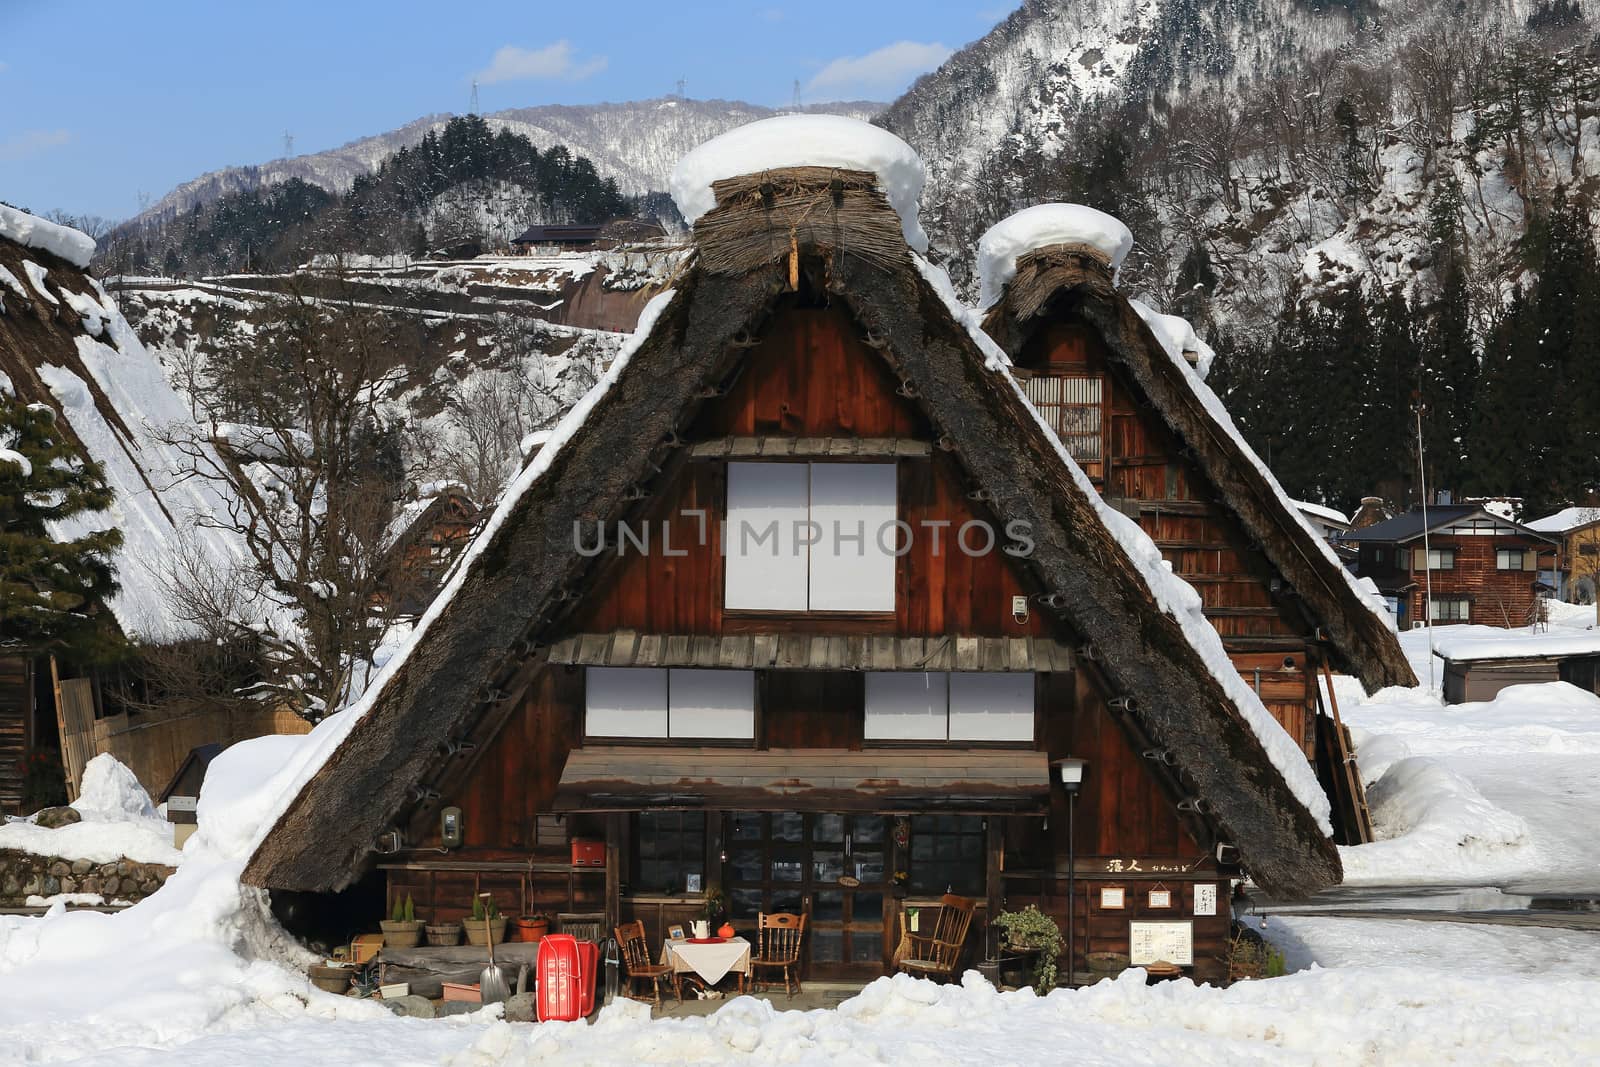 Cottage at Gassho-zukuri Village/Shirakawago:japan